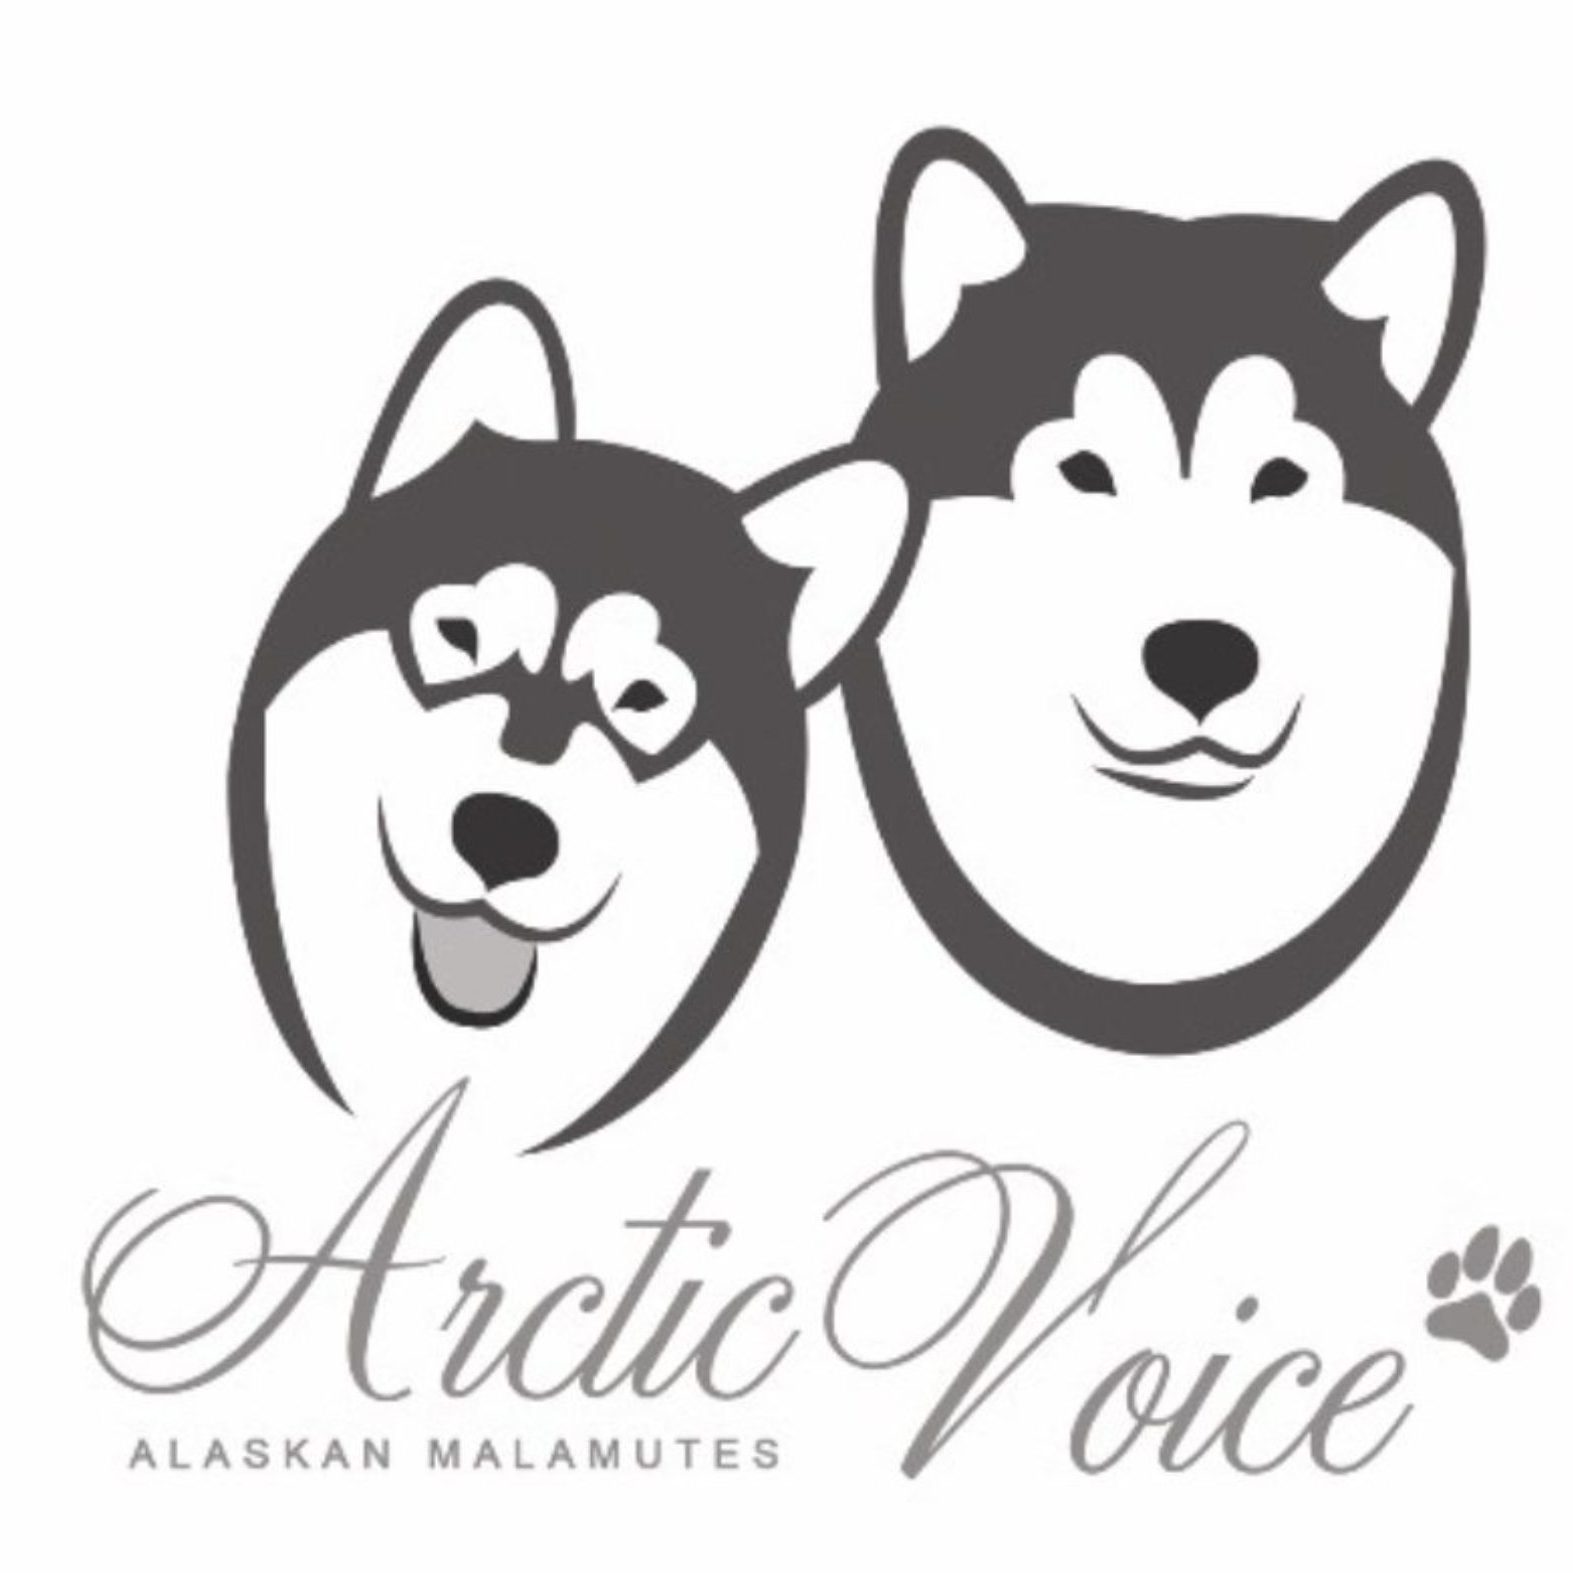 ArcticVoice Alaskan Malamutes